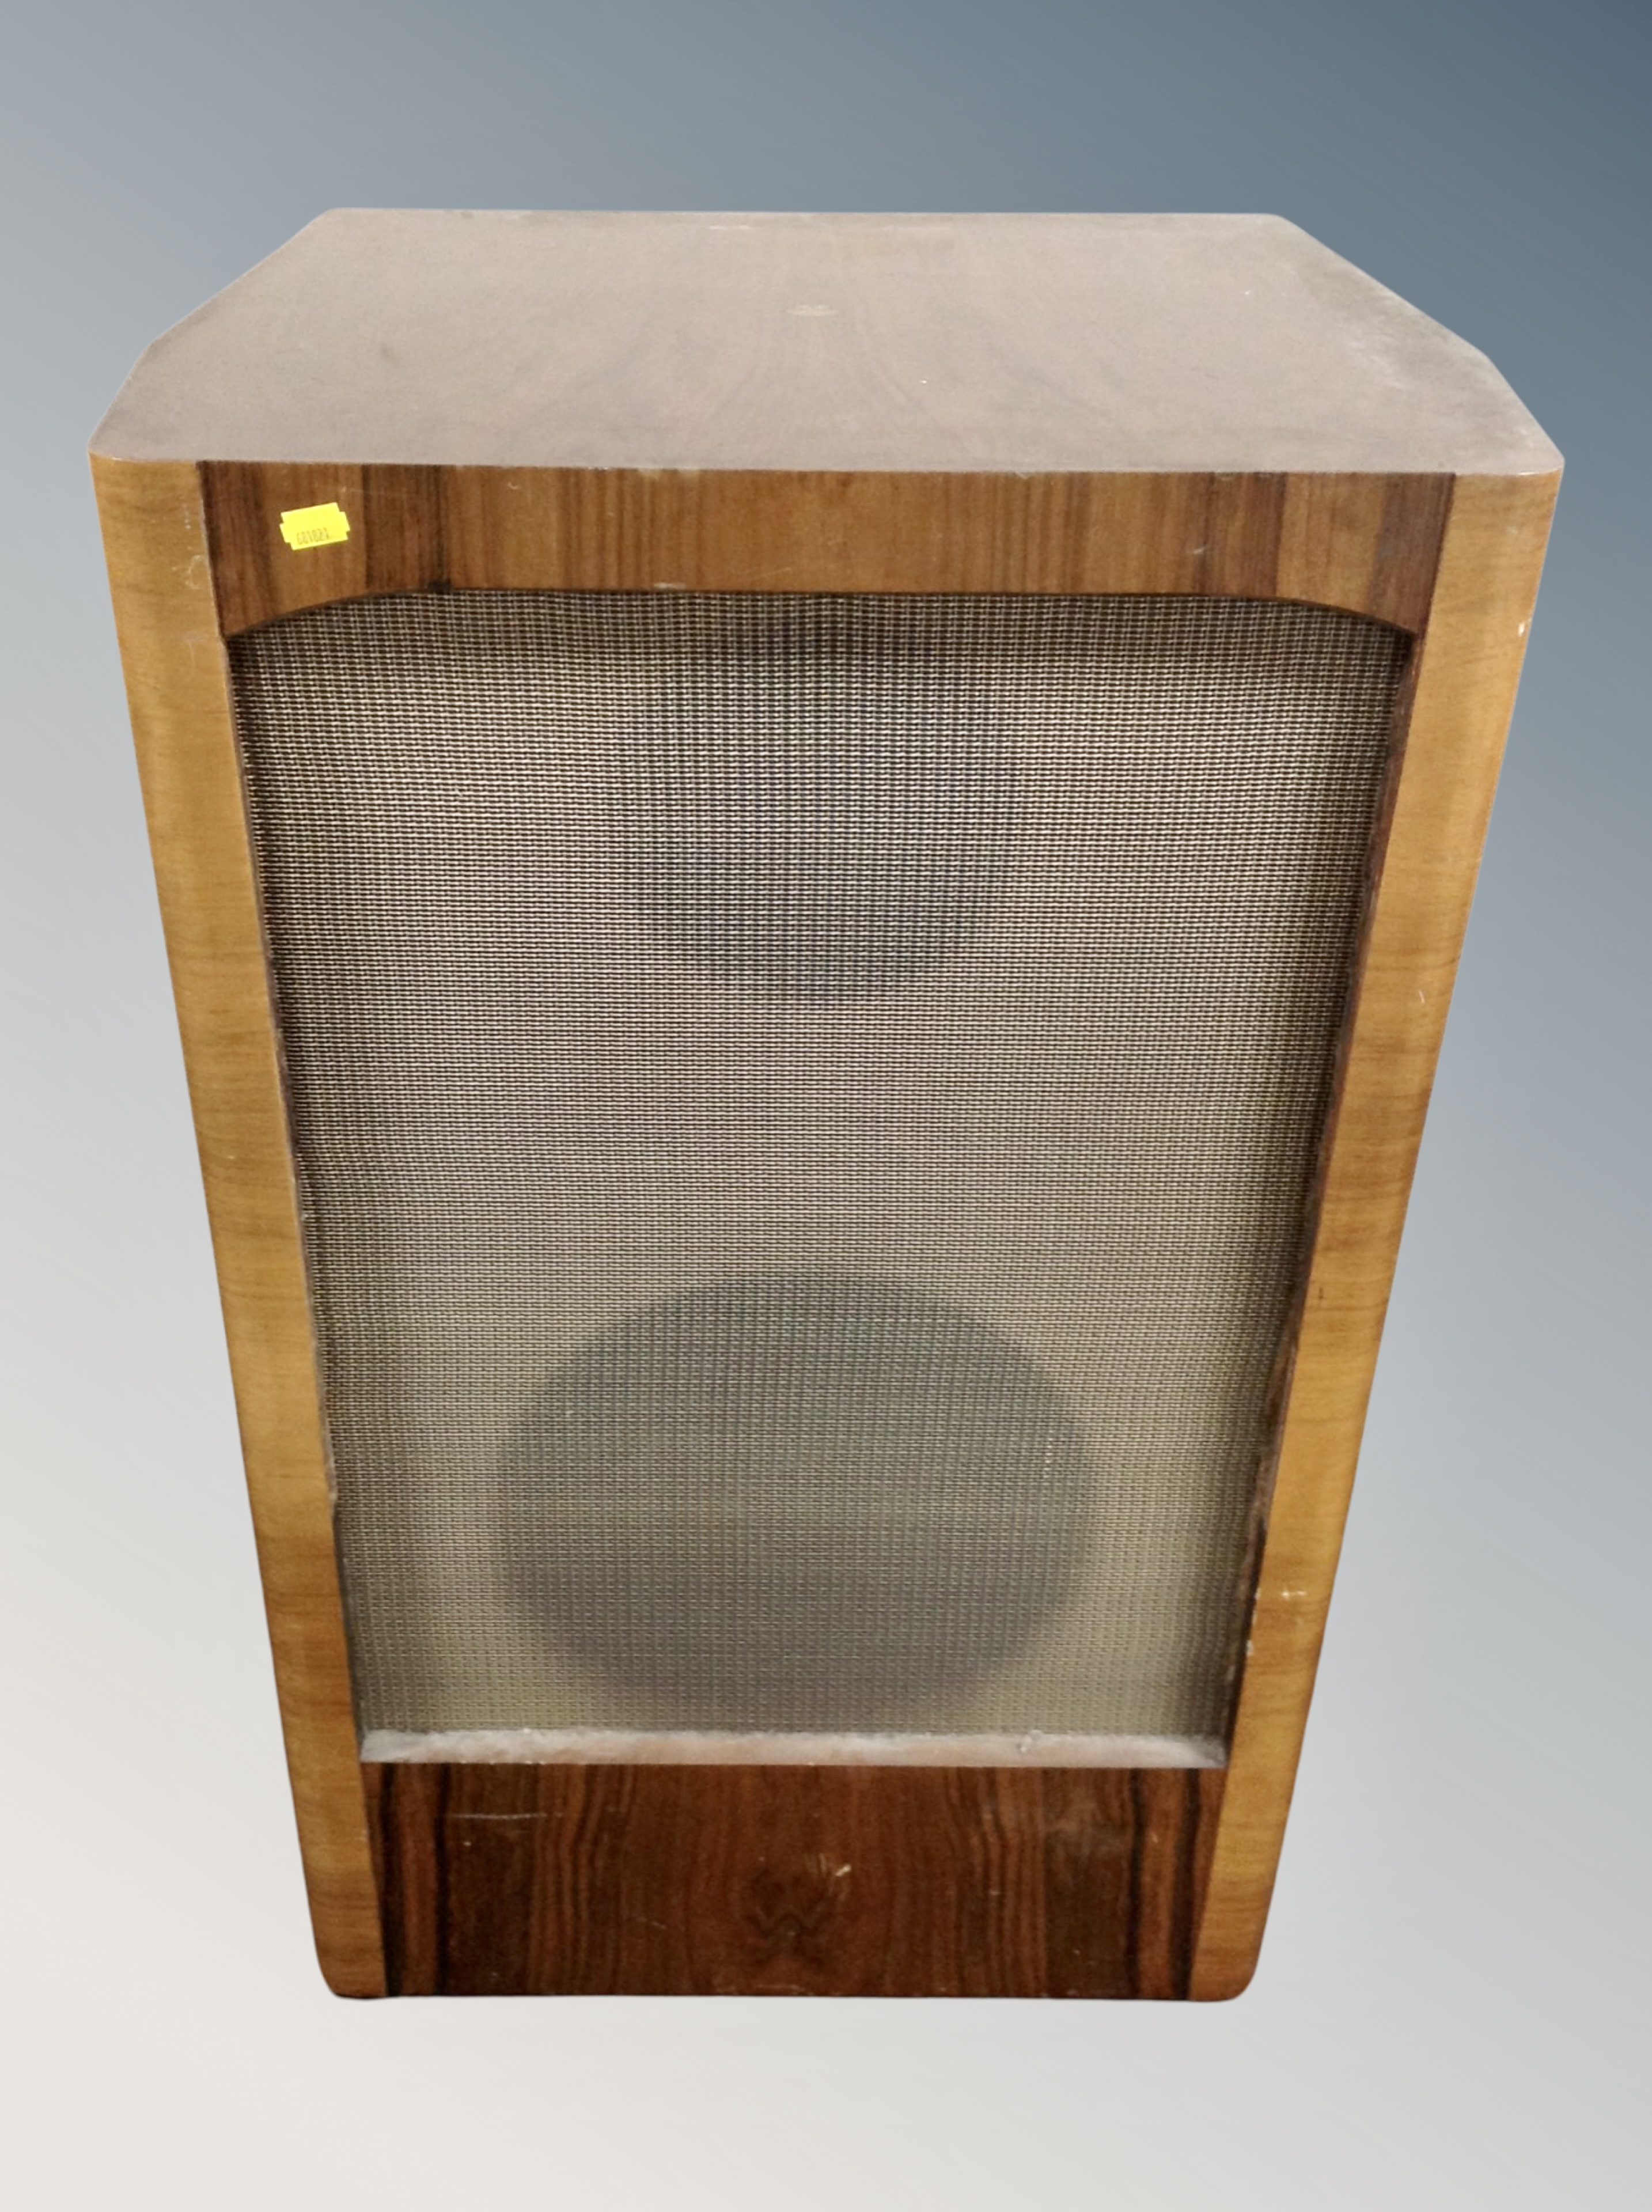 A vintage Regentone walnut cased speaker